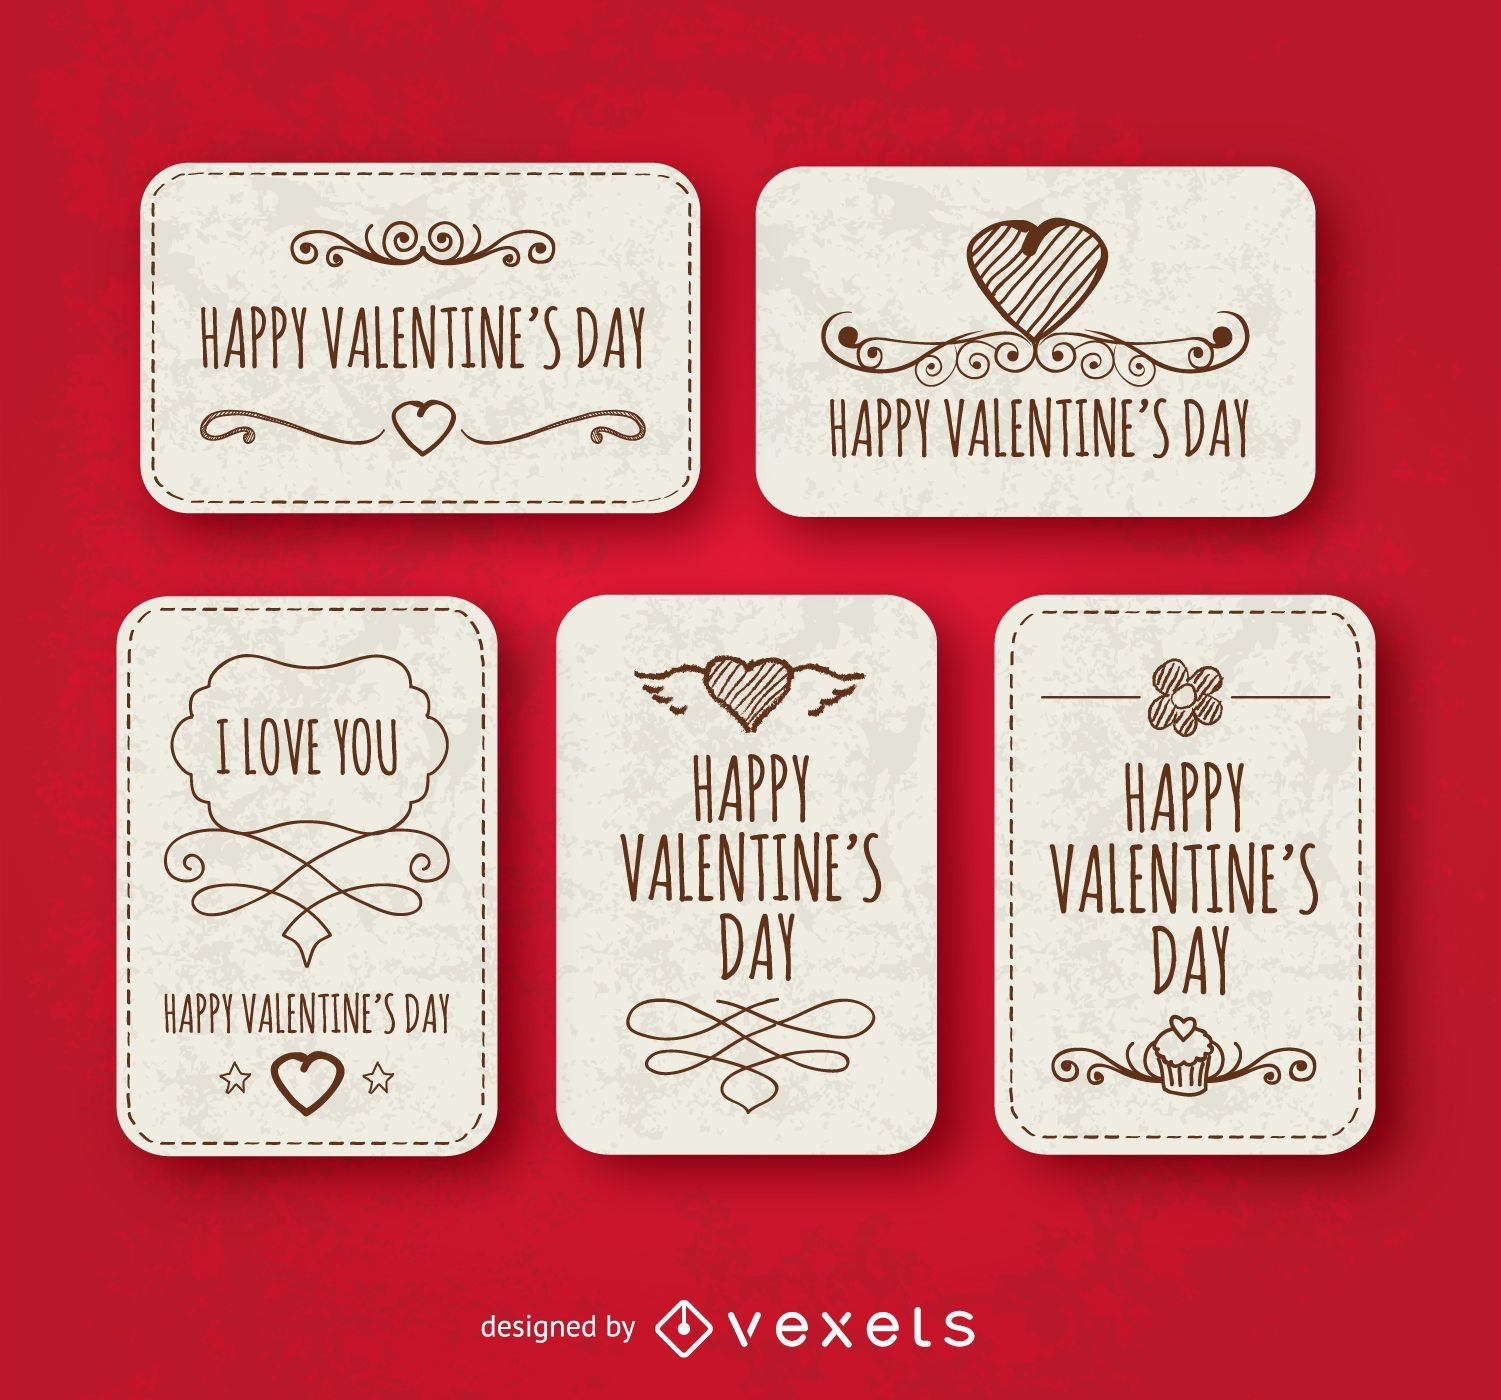 happy-valentine-s-day-labels-vector-download